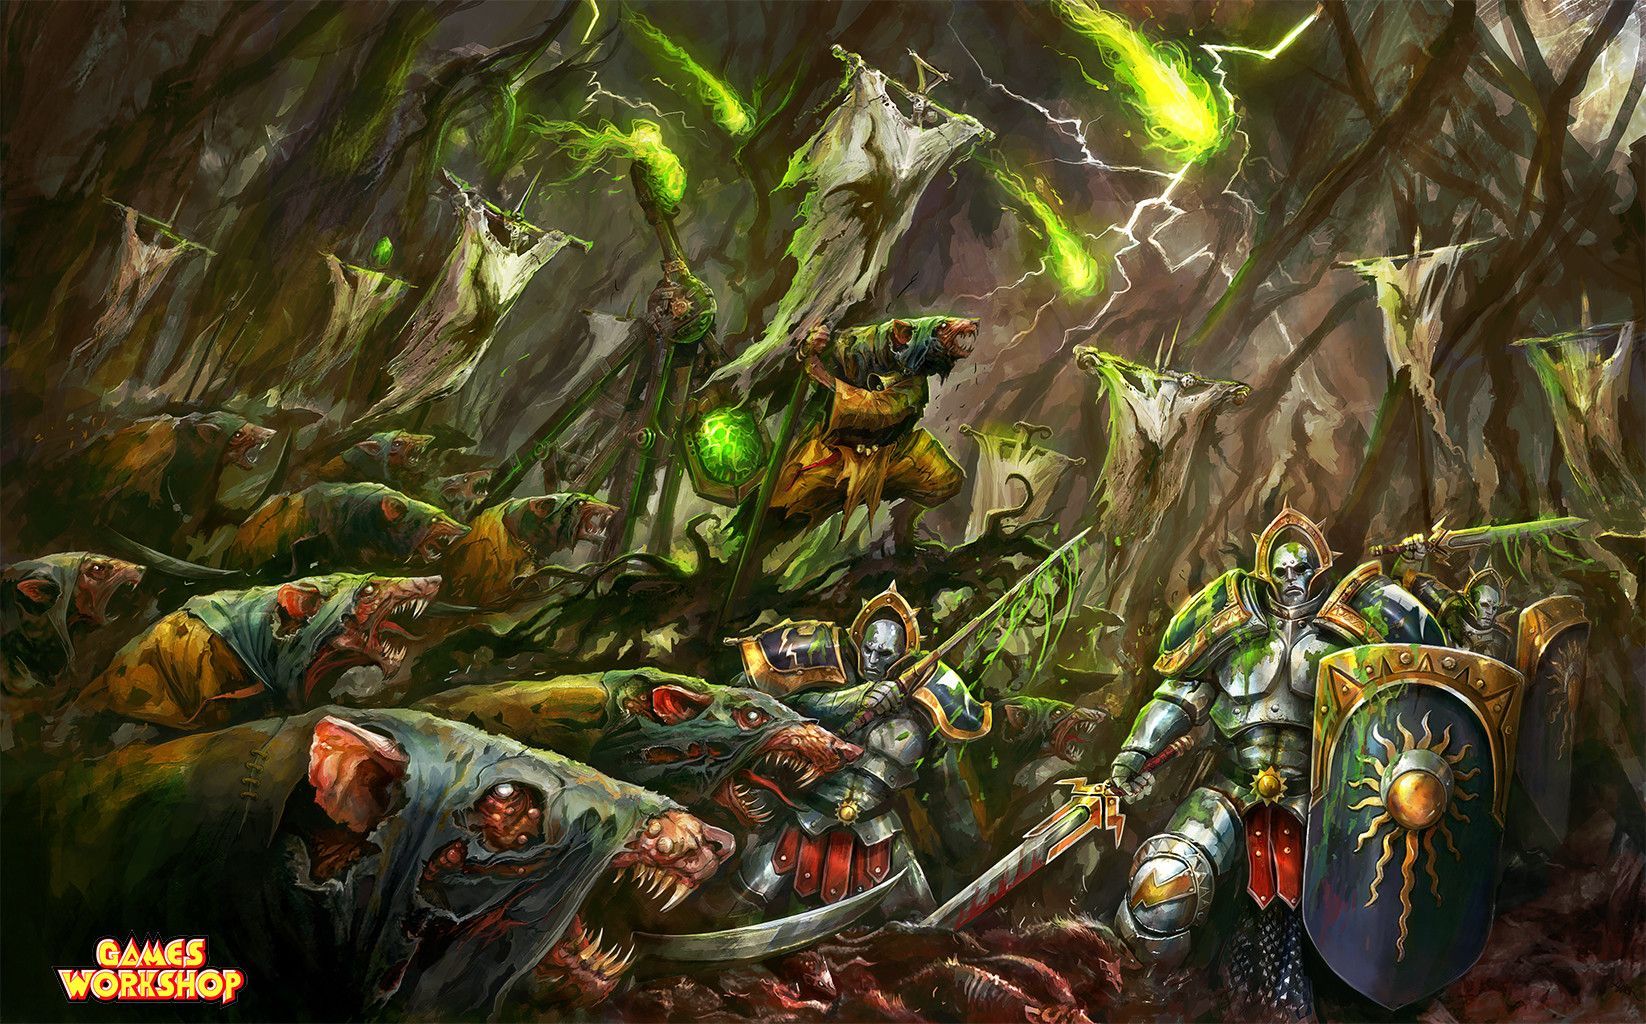 Skavens Pestilens Battle Skaven Battletome, Alexandre Chaudret. Warhammer skaven, Warhammer, Warhammer fantasy